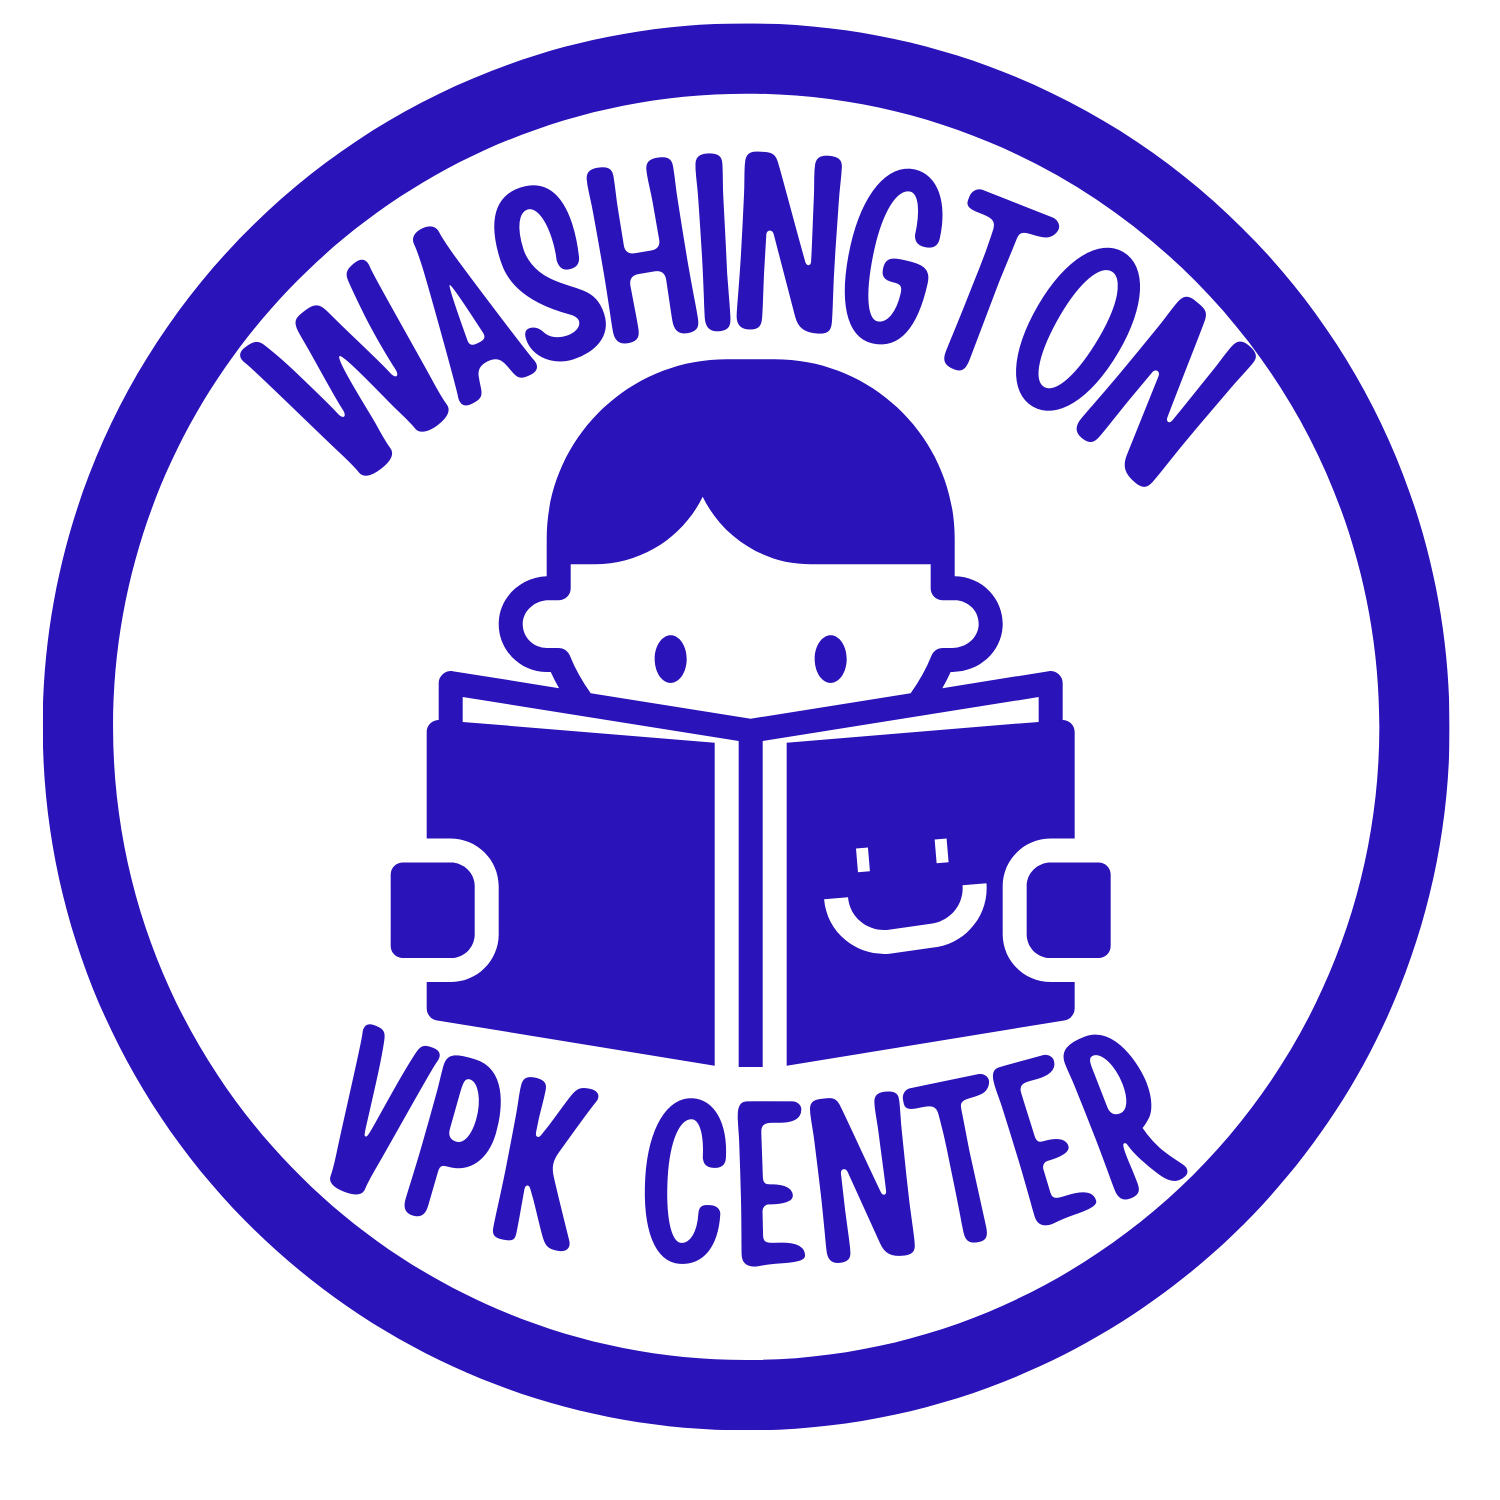 Washington County VPK Center Logo